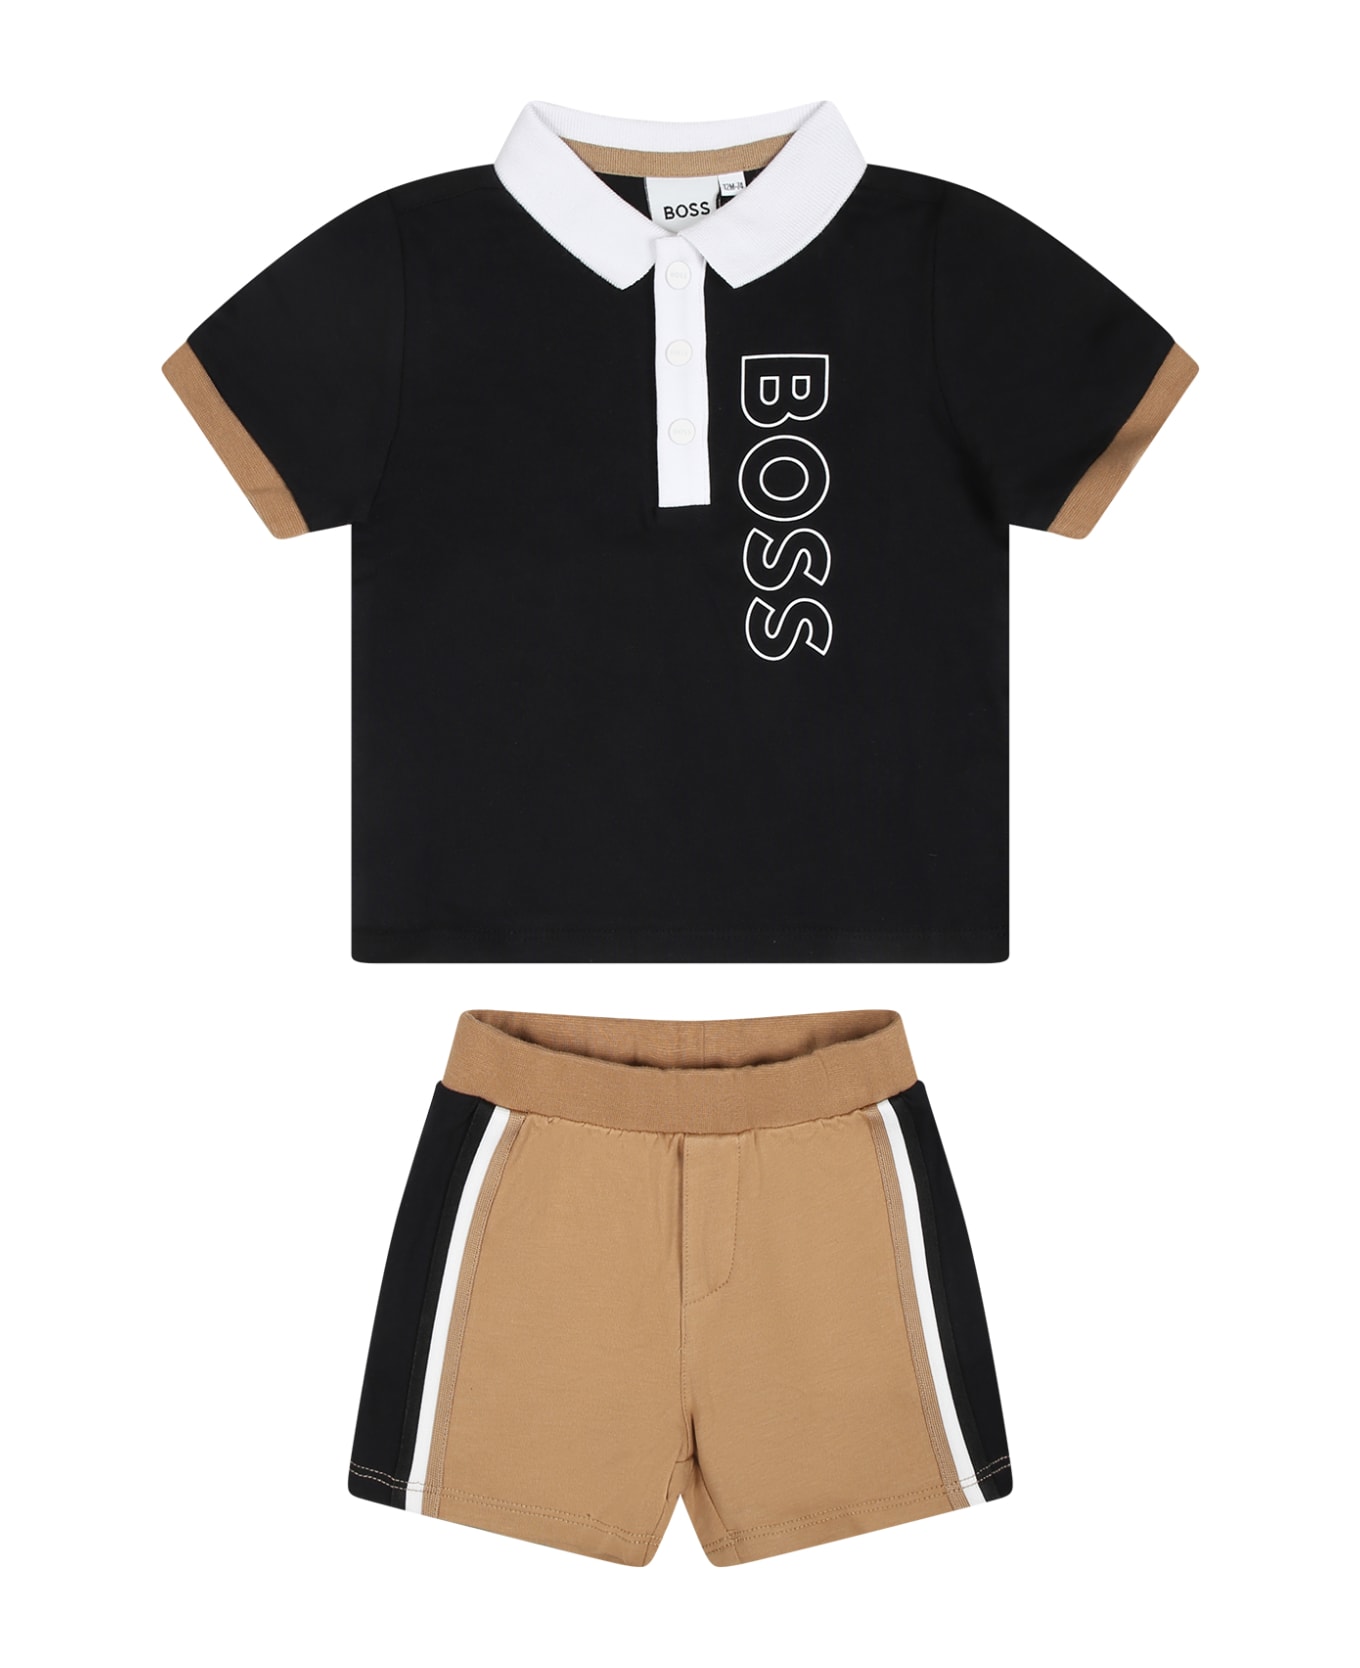 Hugo Boss Multicolor Sport Suit Set For Baby Boy - Multicolor ボトムス